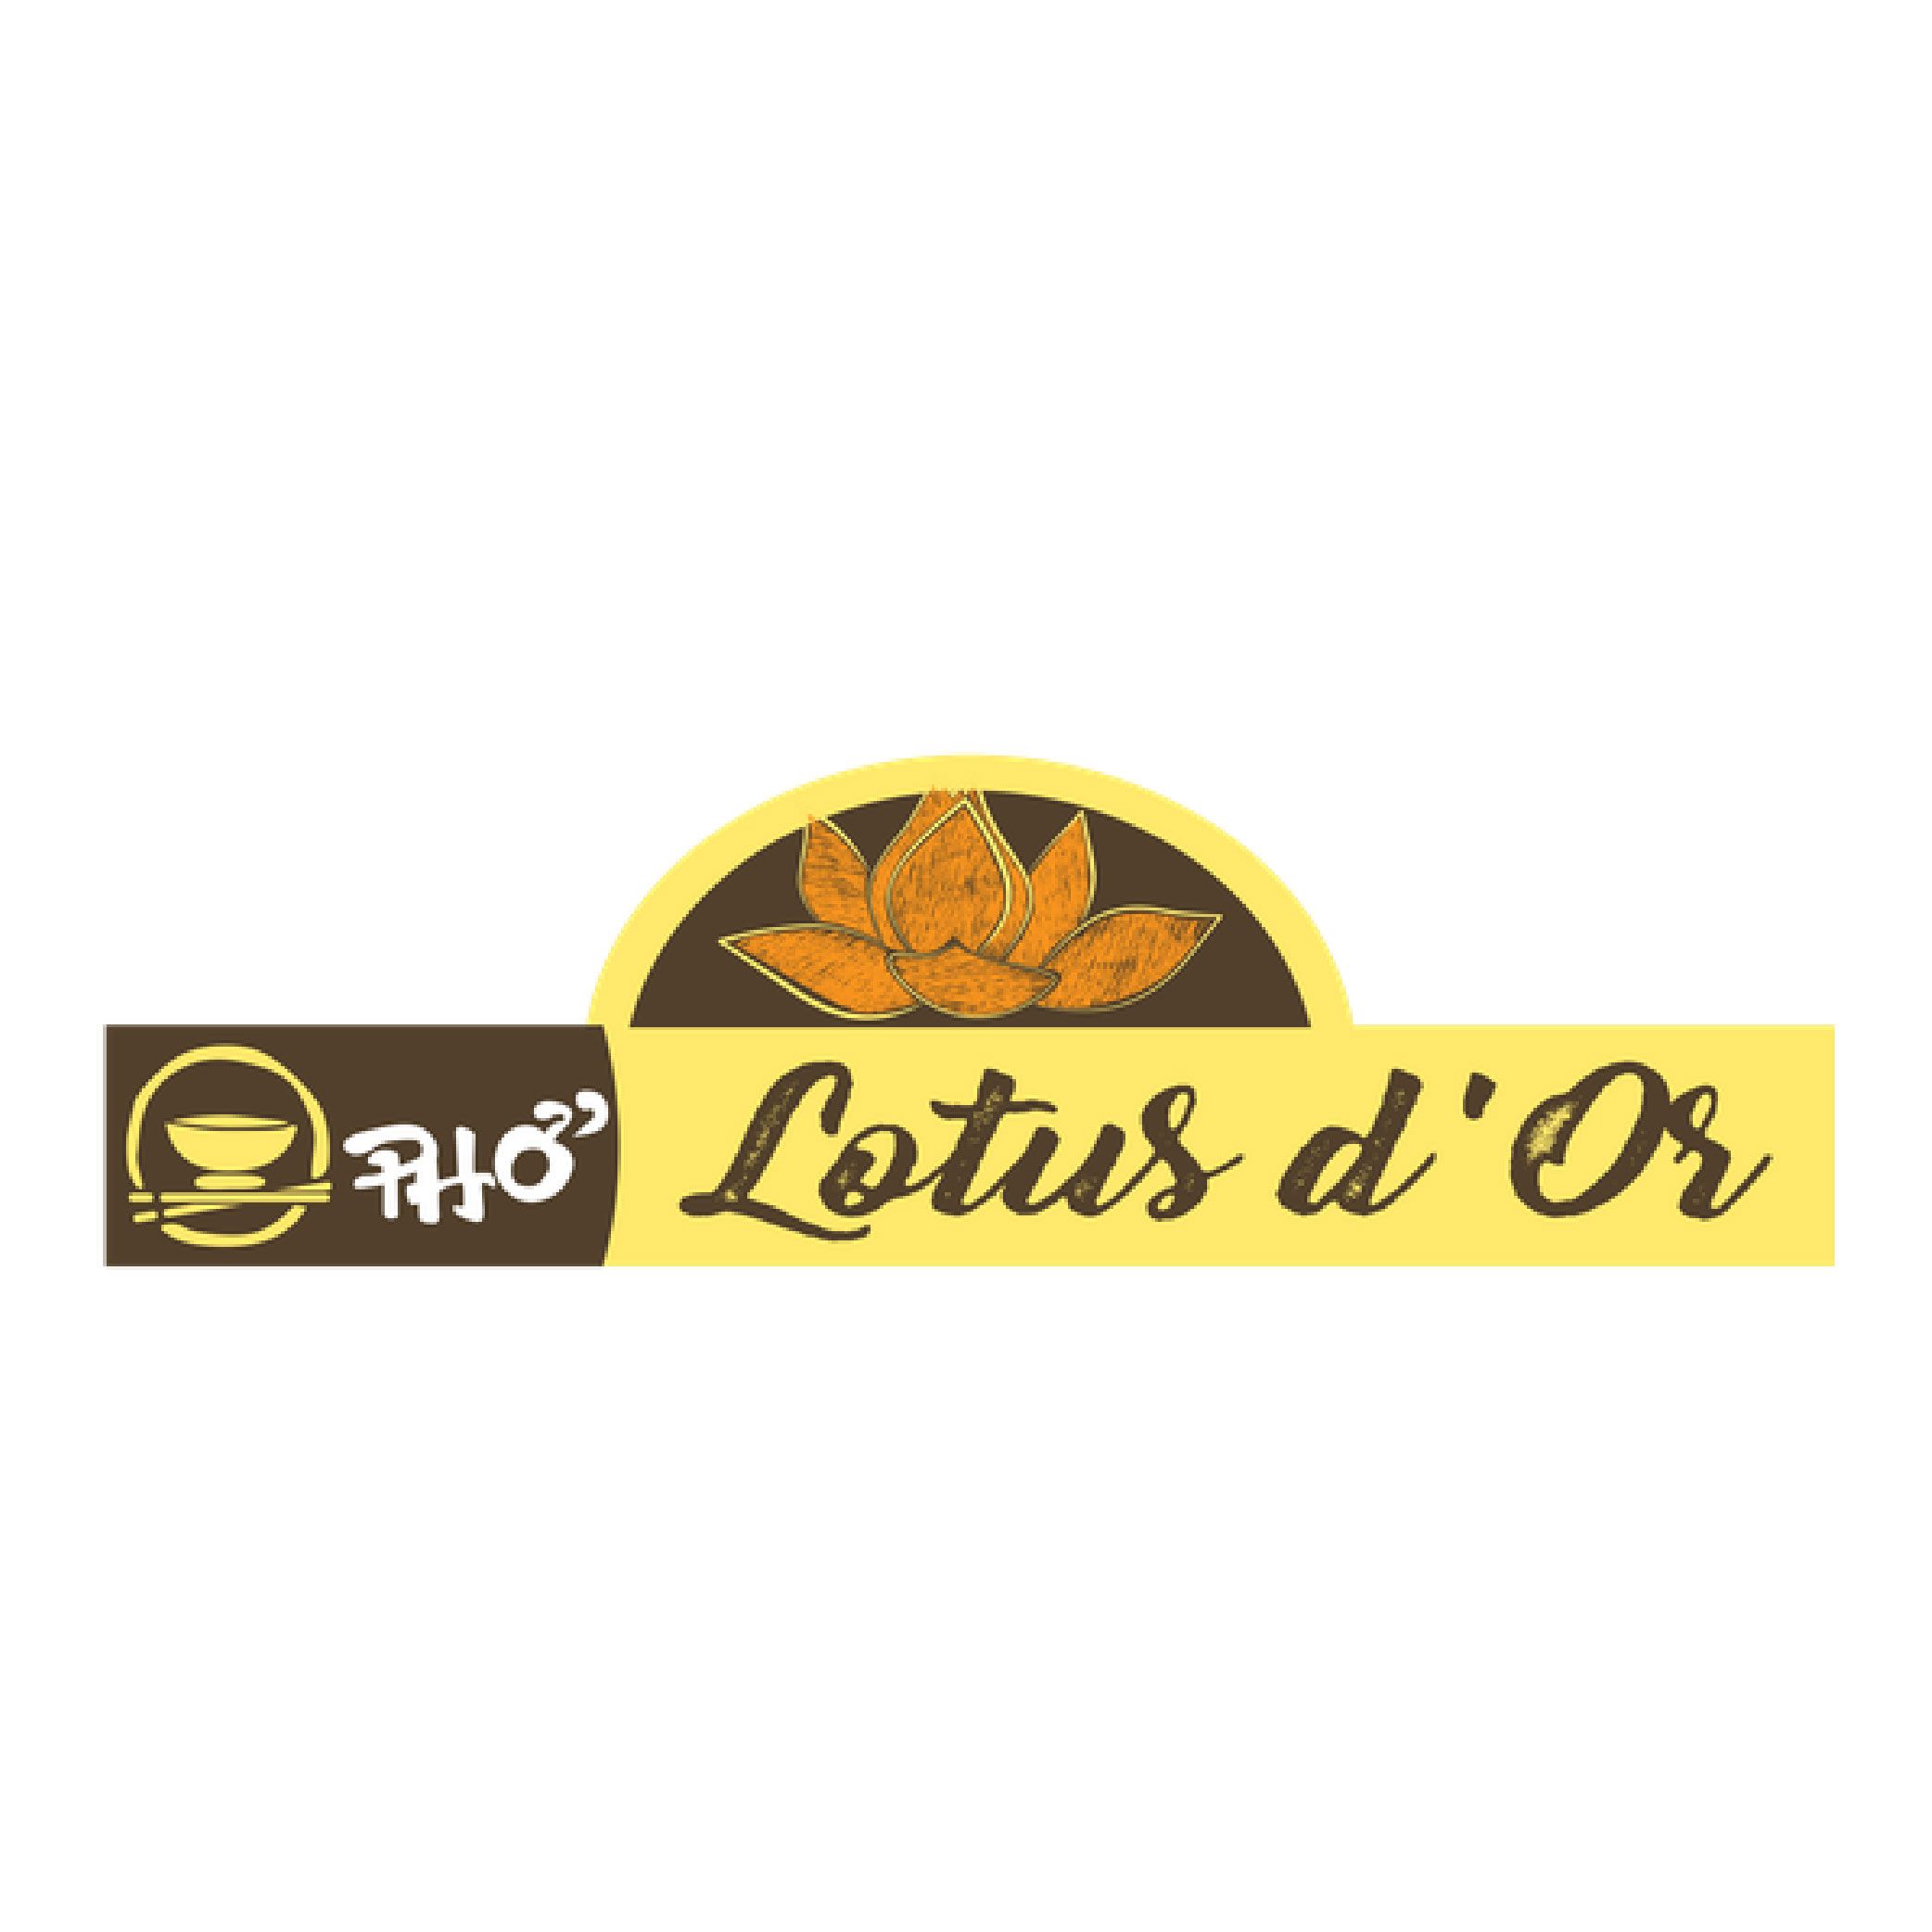 Le Lotus d'Or